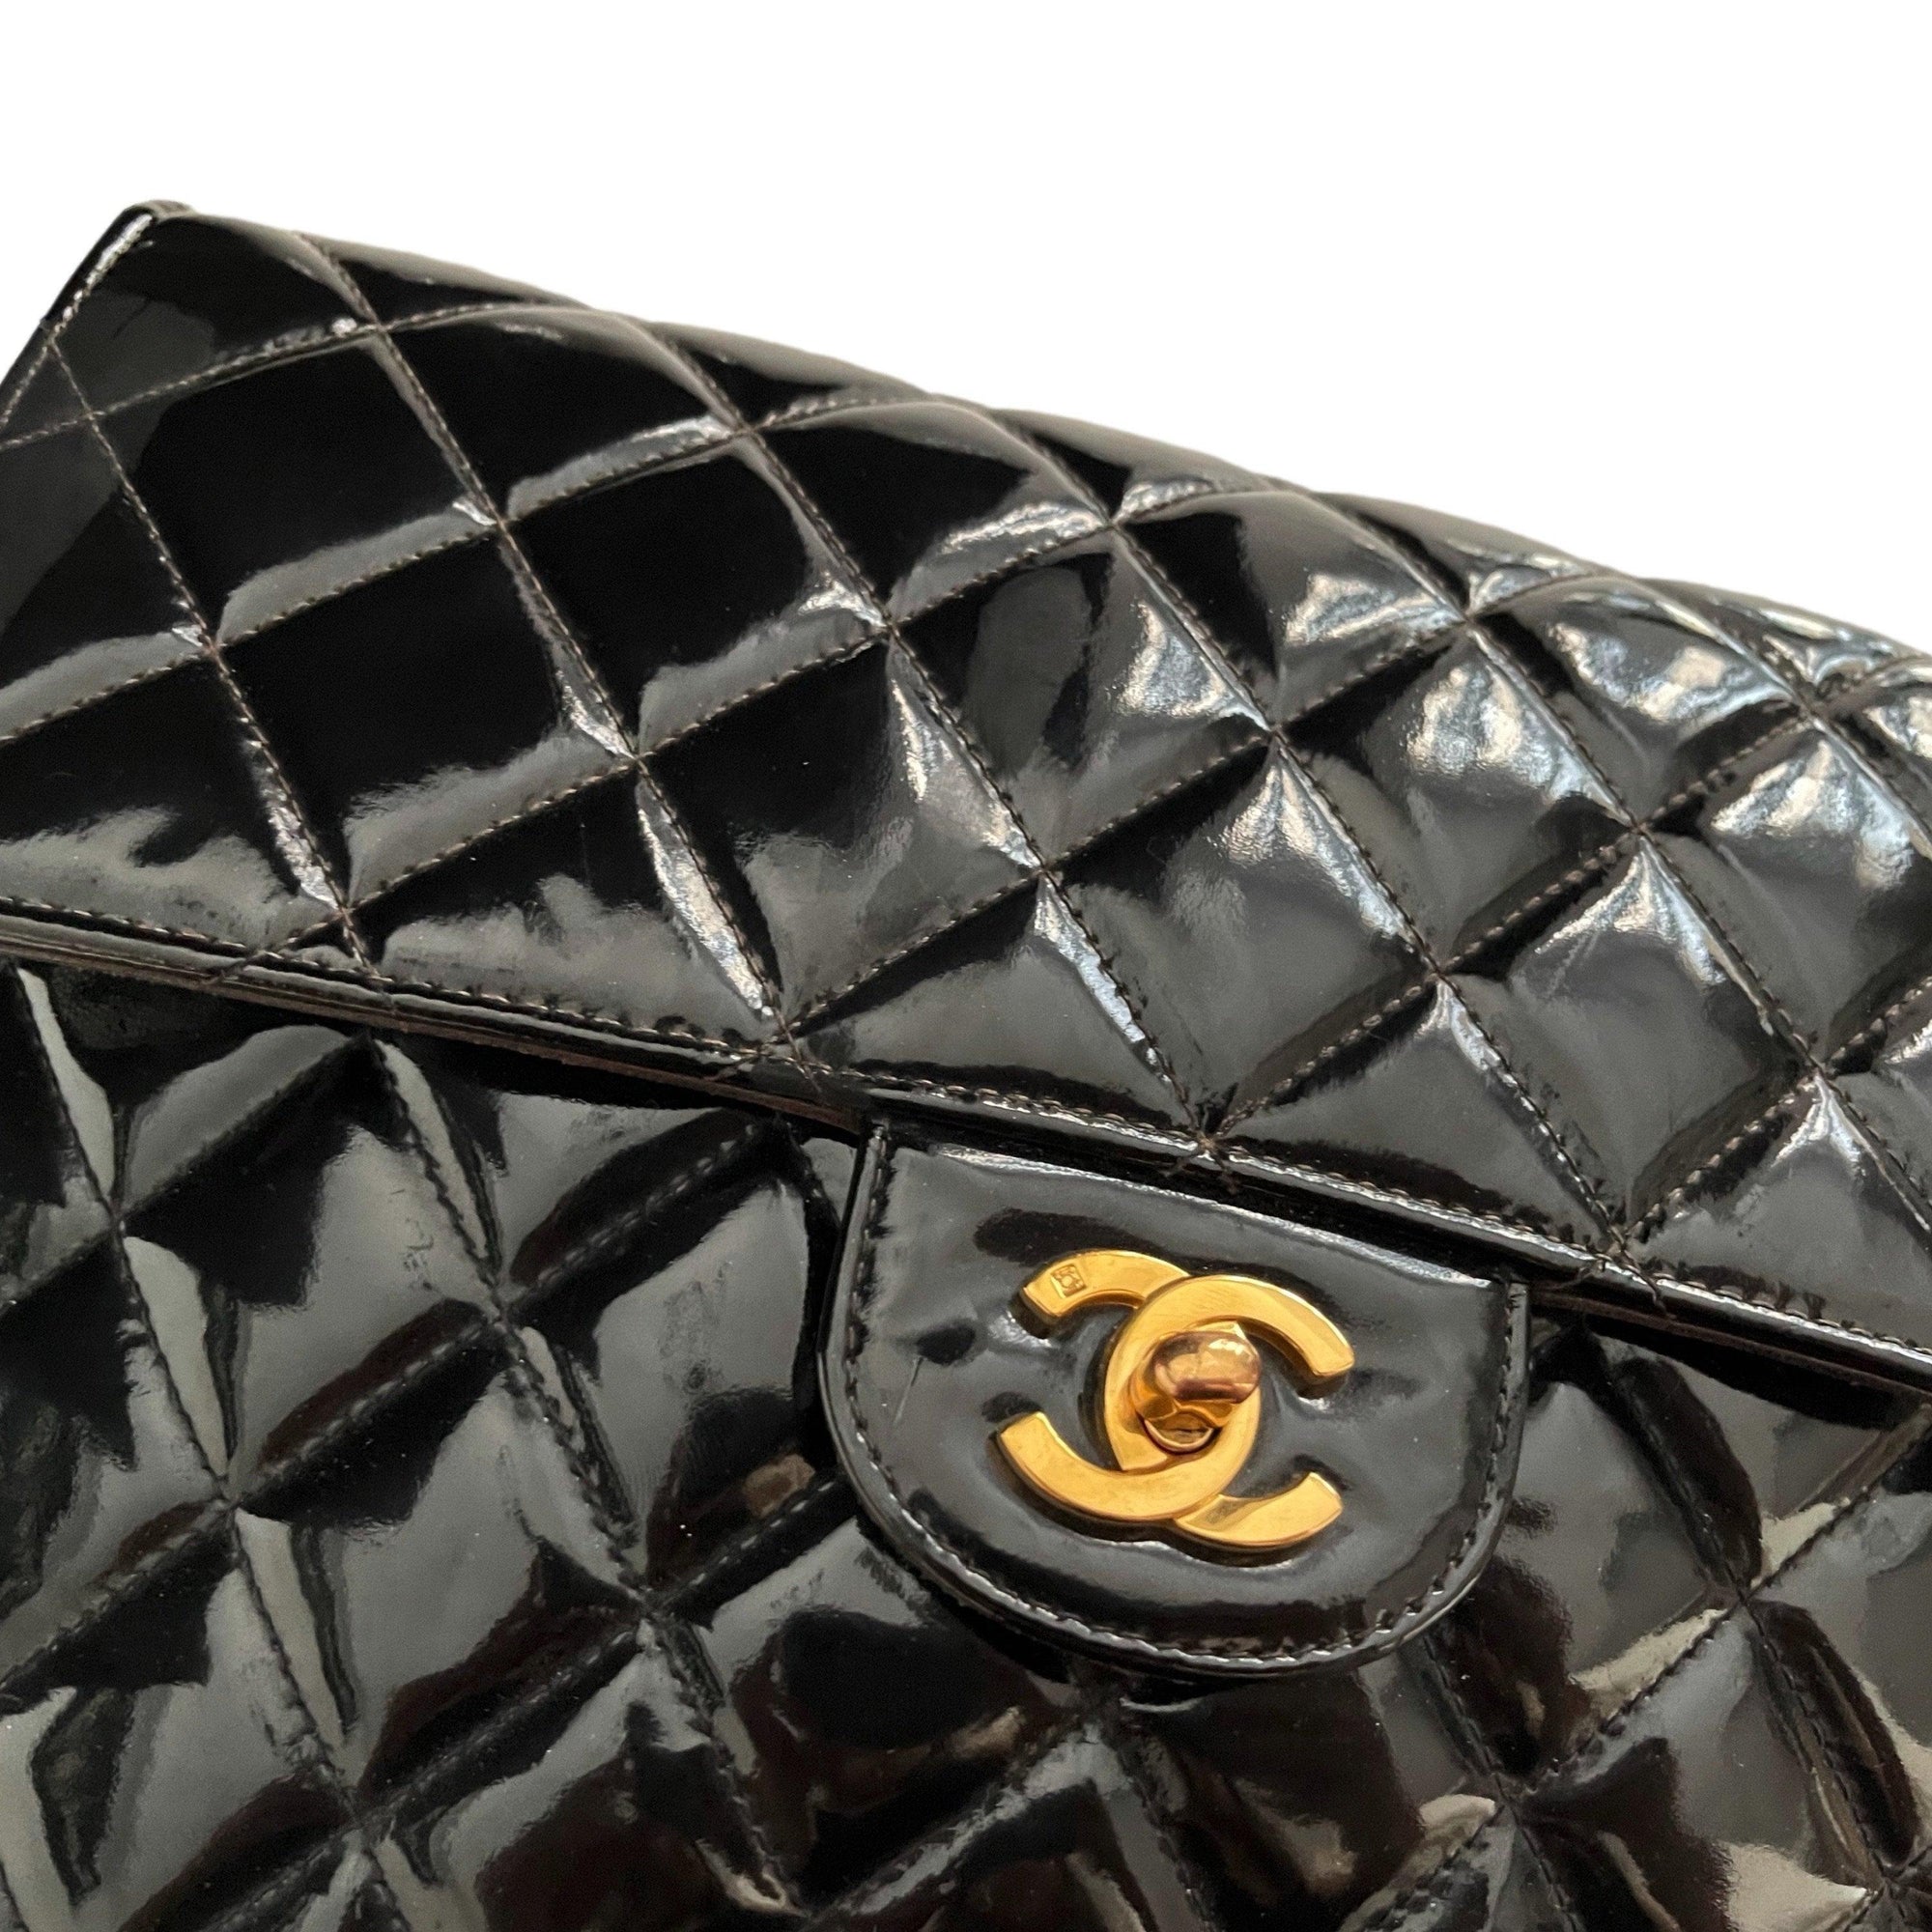 Chanel Black Patent Backpack - Handbags